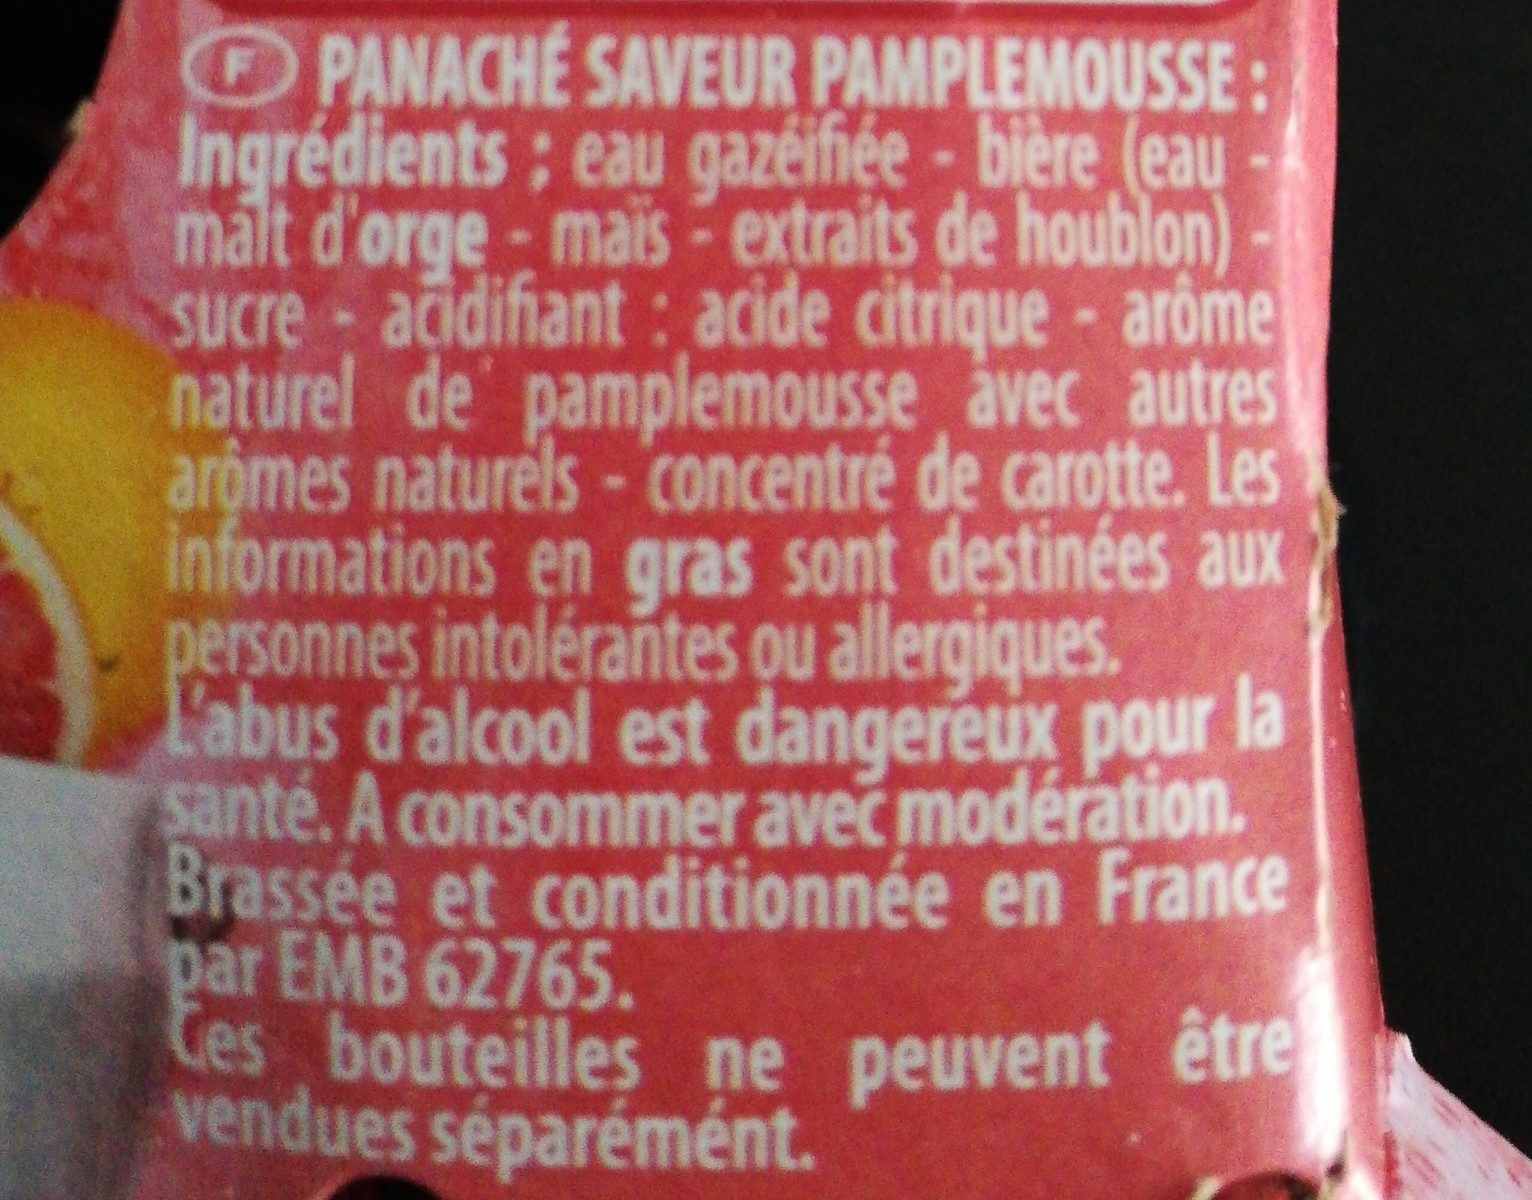 Panaché saveur pamplemousse - Ingredienser - fr